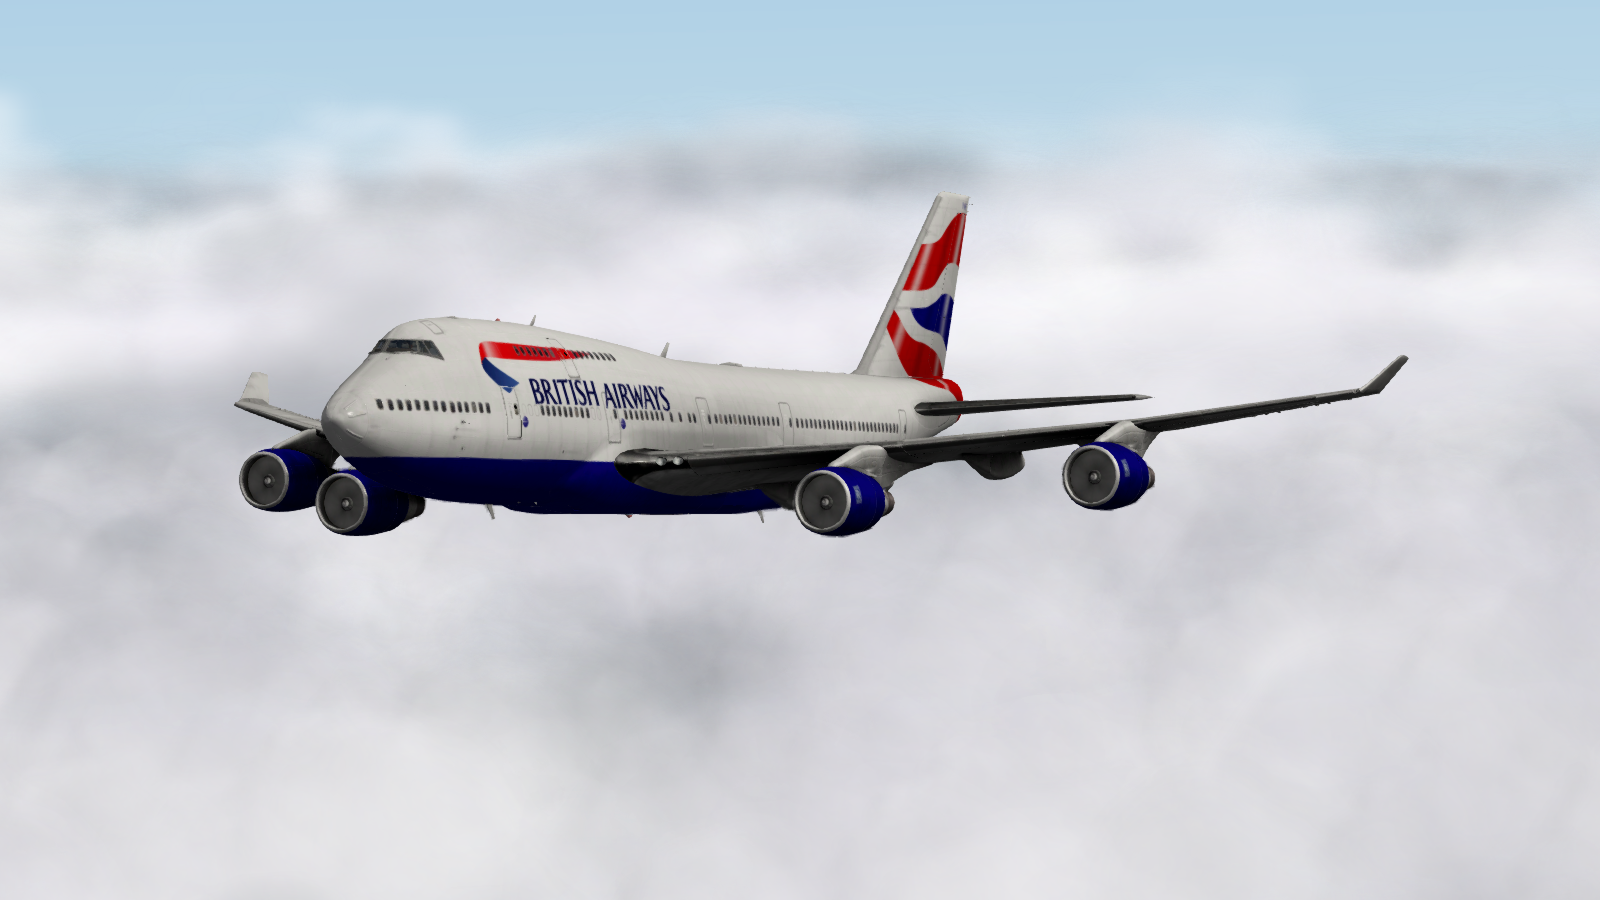 More information about "British Airways for Default 747-400"